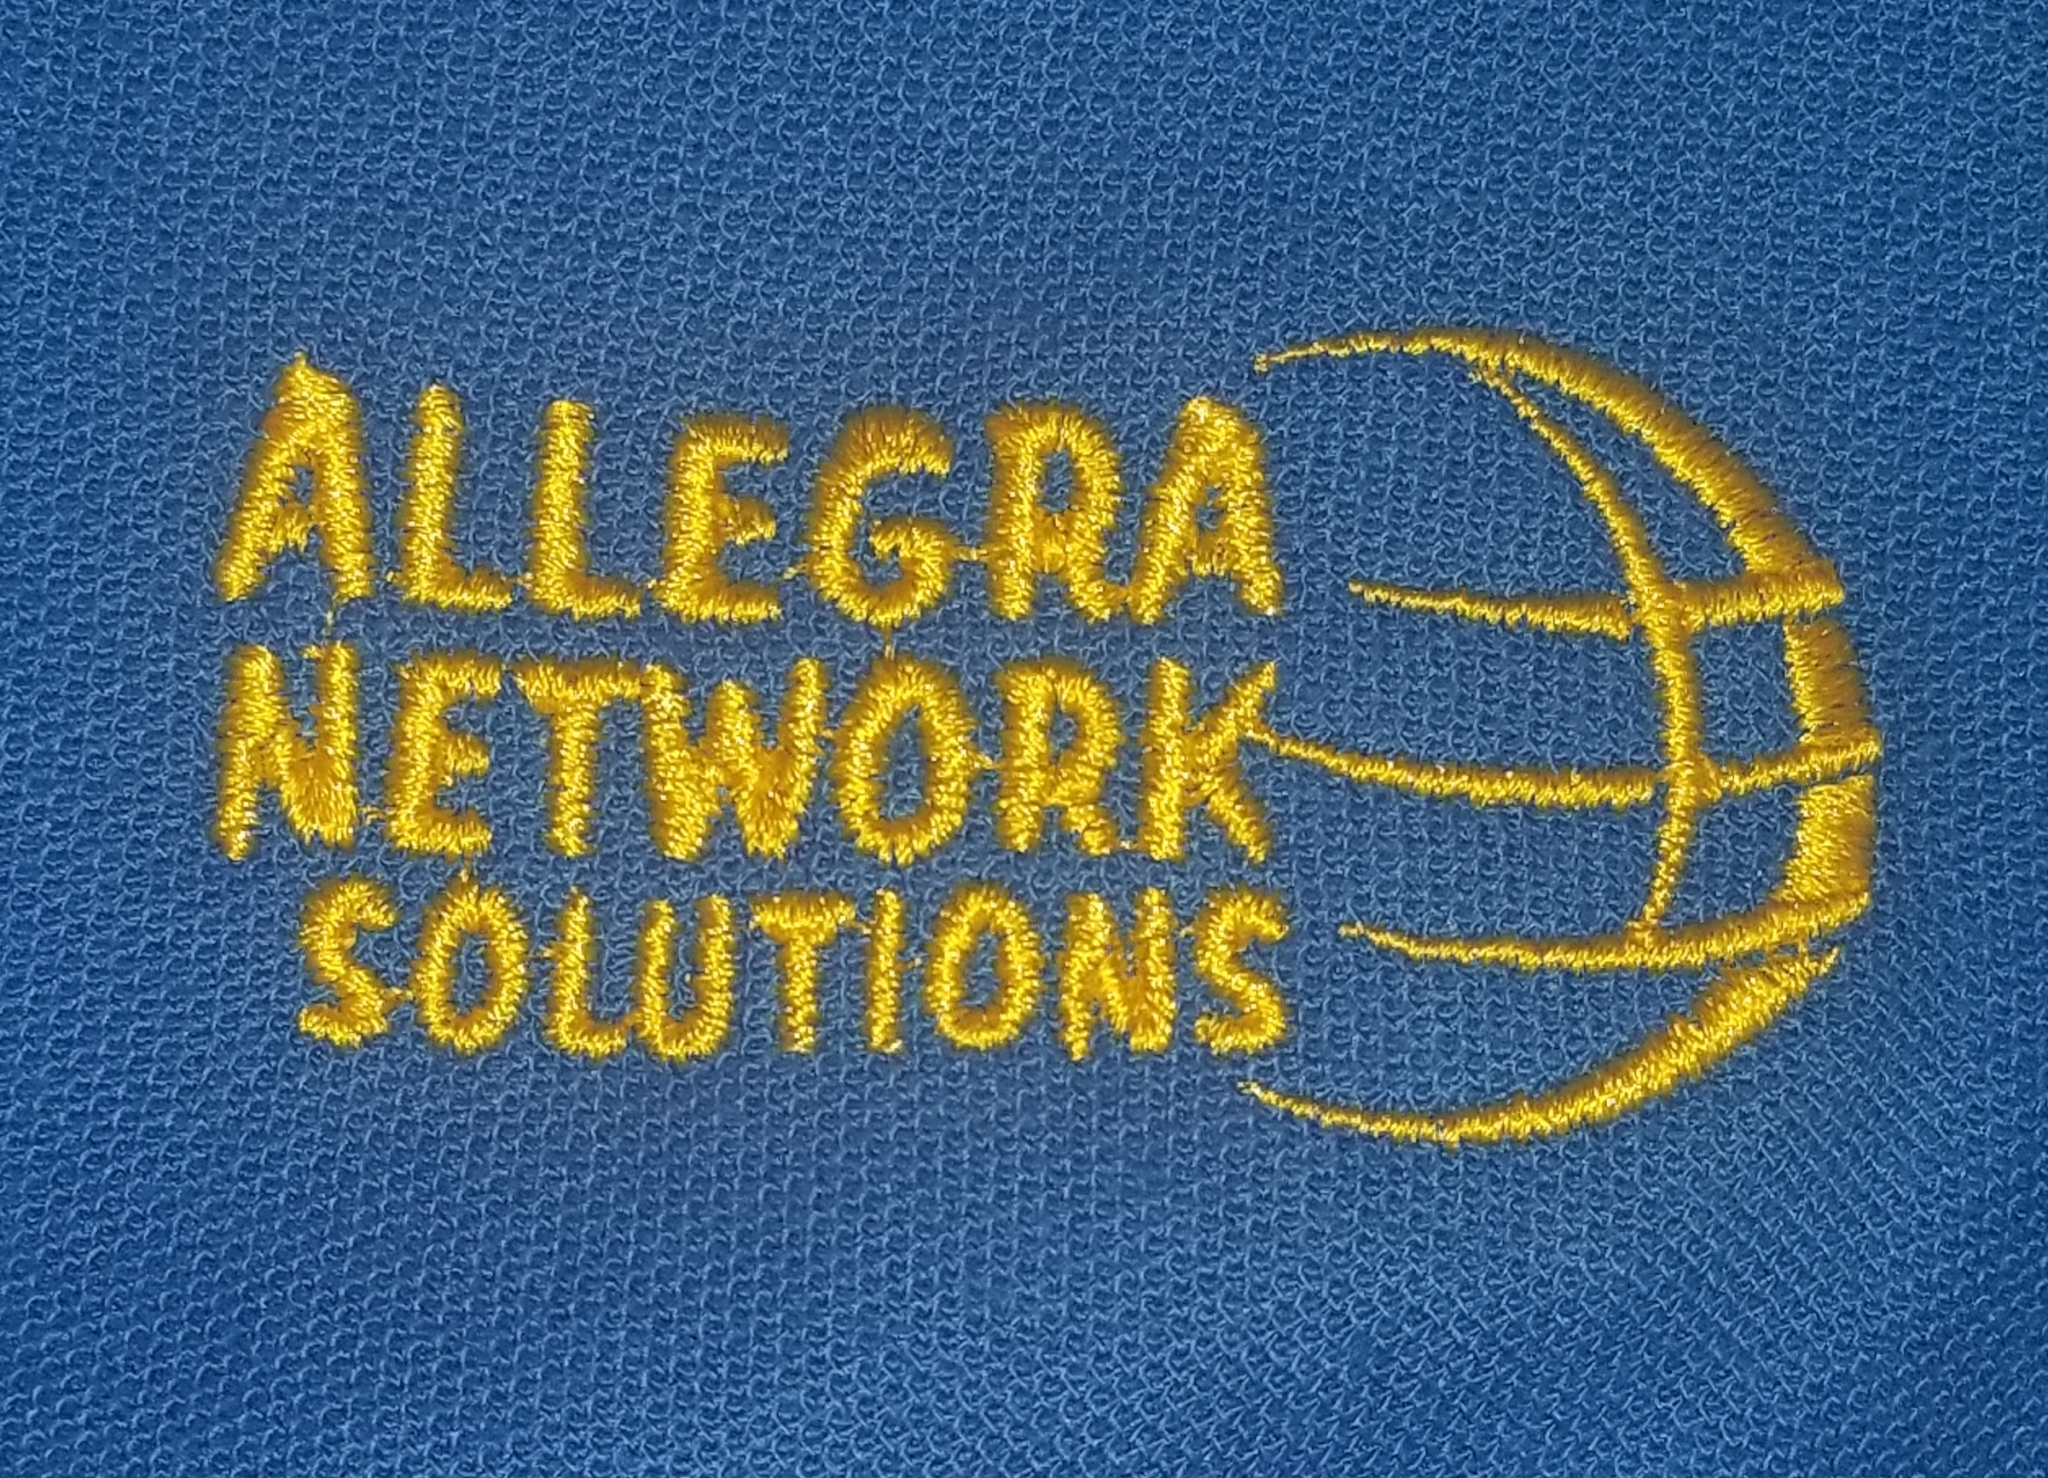 Allegra Network Solutions 